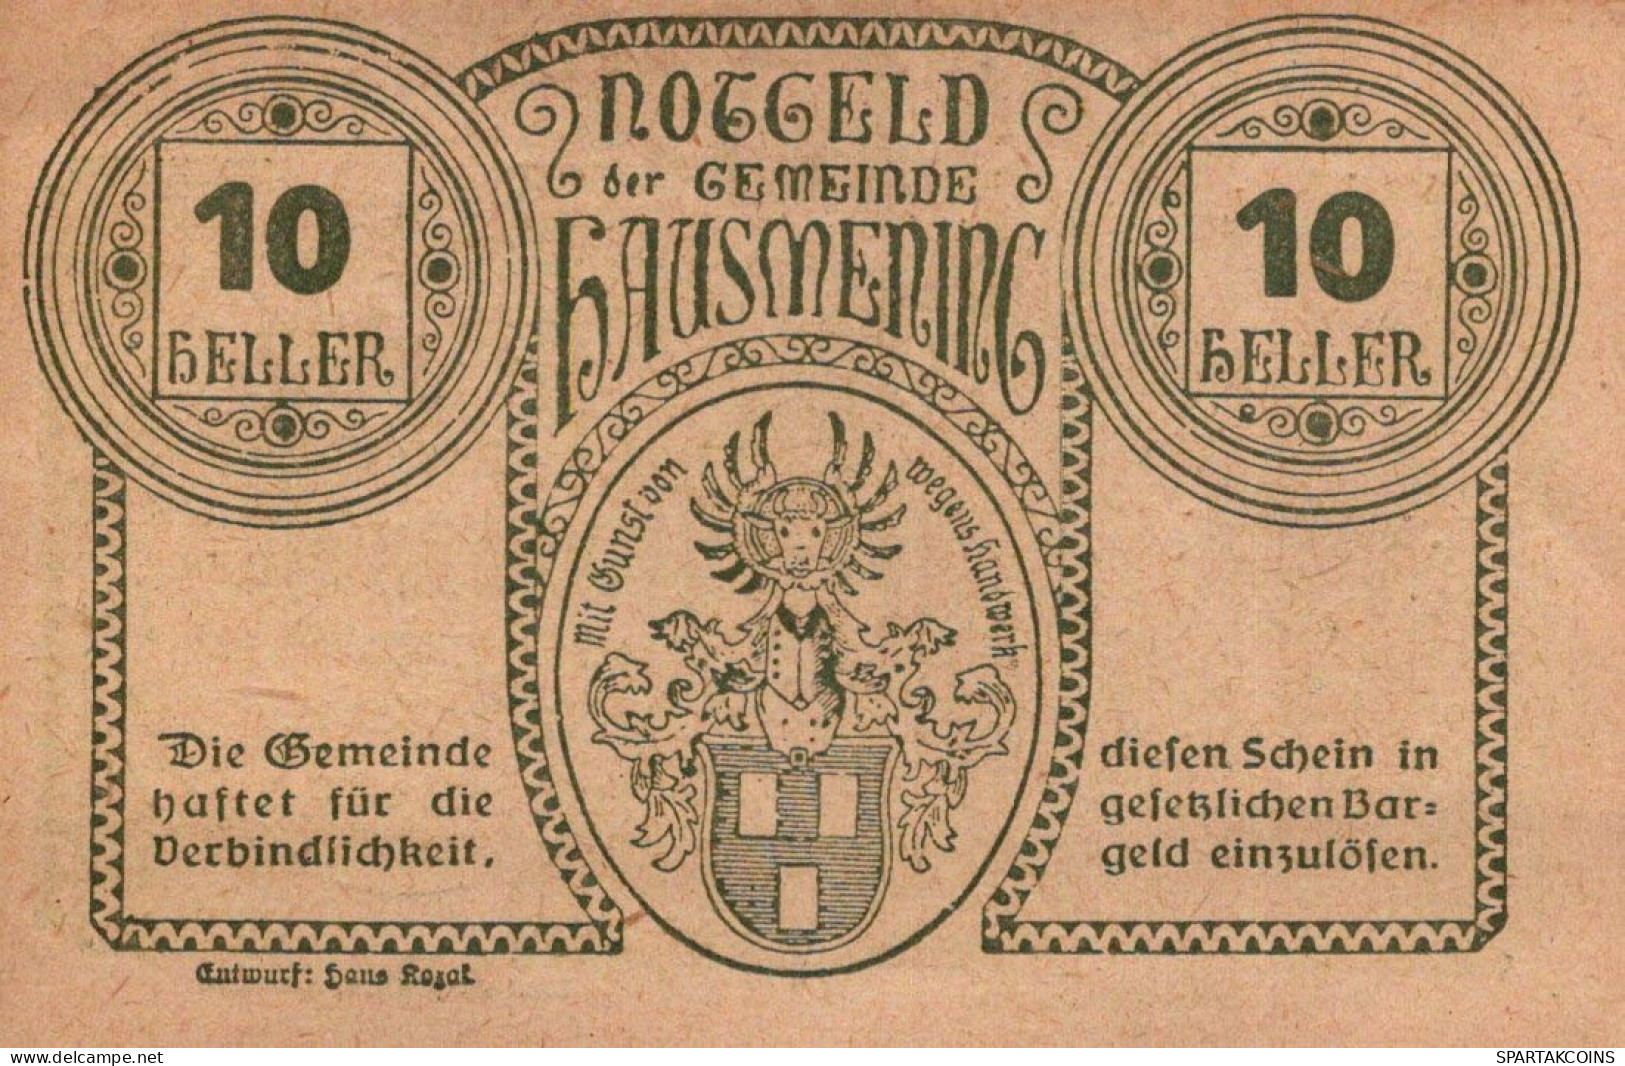 10 HELLER 1920 Stadt HAUSMENING Niedrigeren Österreich Notgeld Papiergeld Banknote #PG860 - [11] Lokale Uitgaven